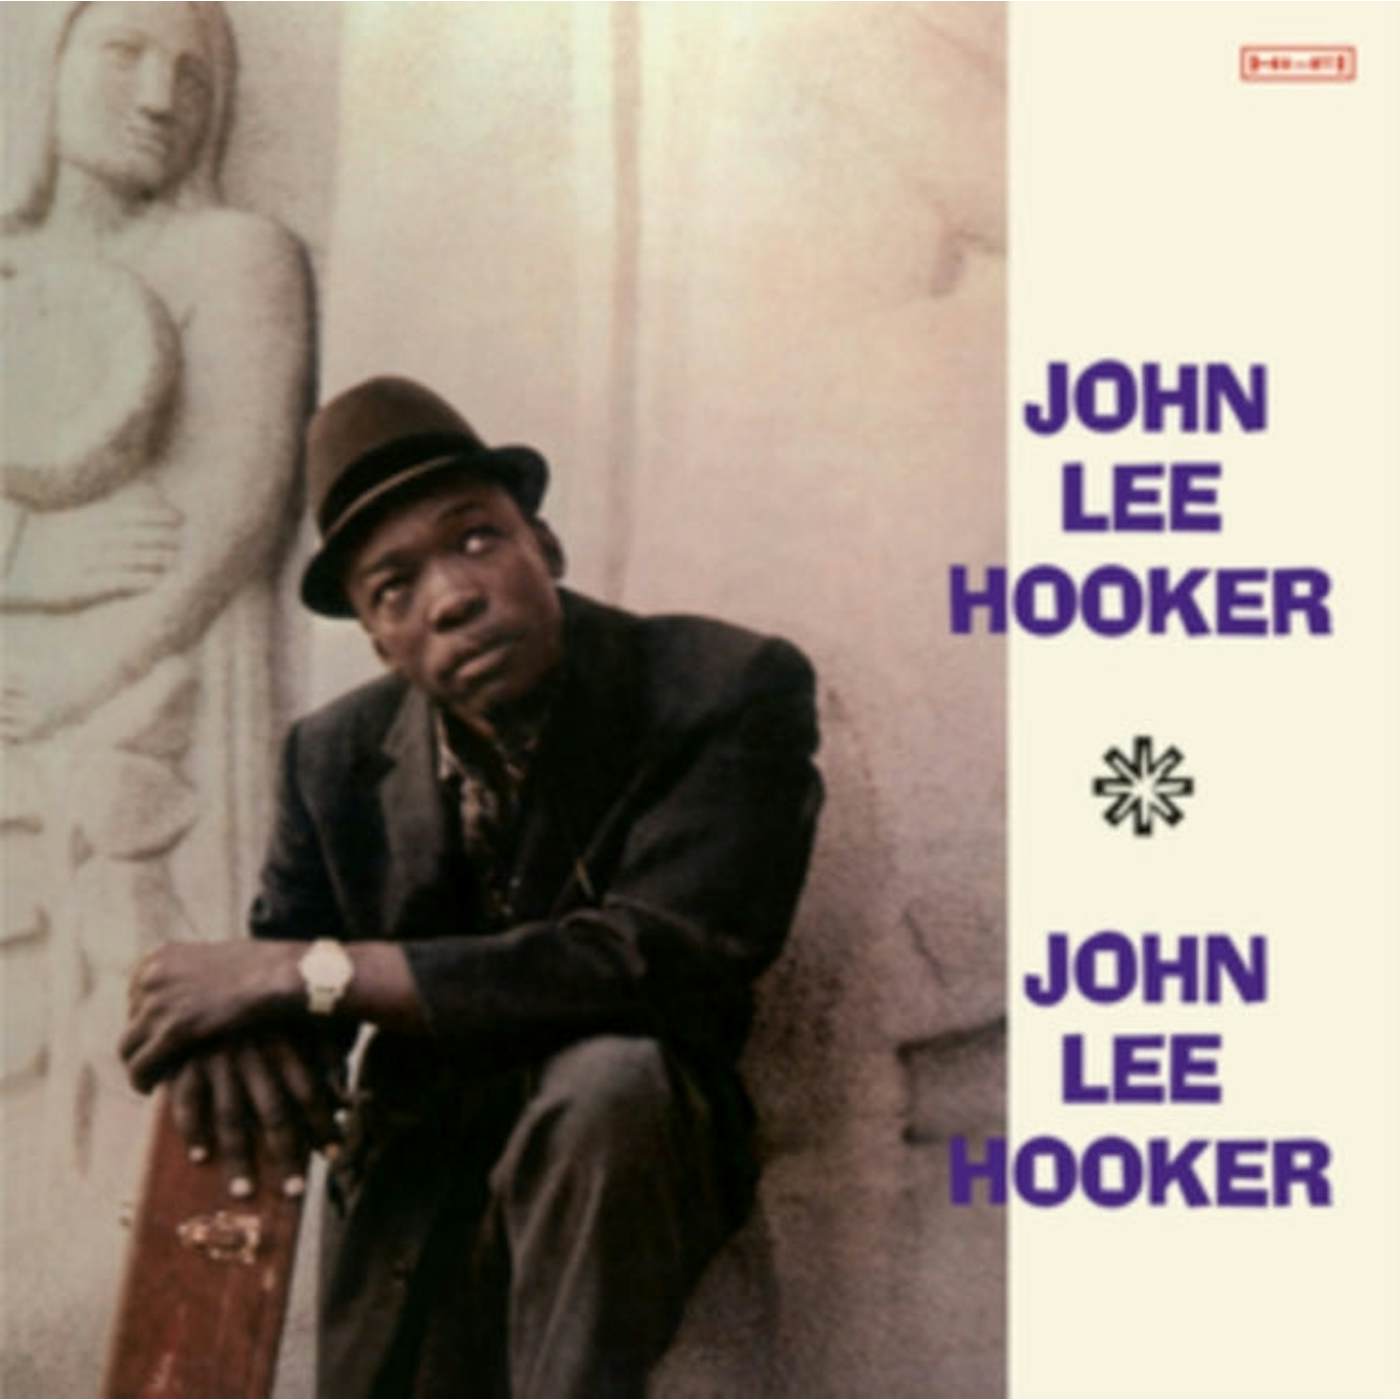 John Lee Hooker LP - John Lee Hooker - The Galaxy Album (+2 Bonus Tracks) (Limited Edition) (Vinyl)